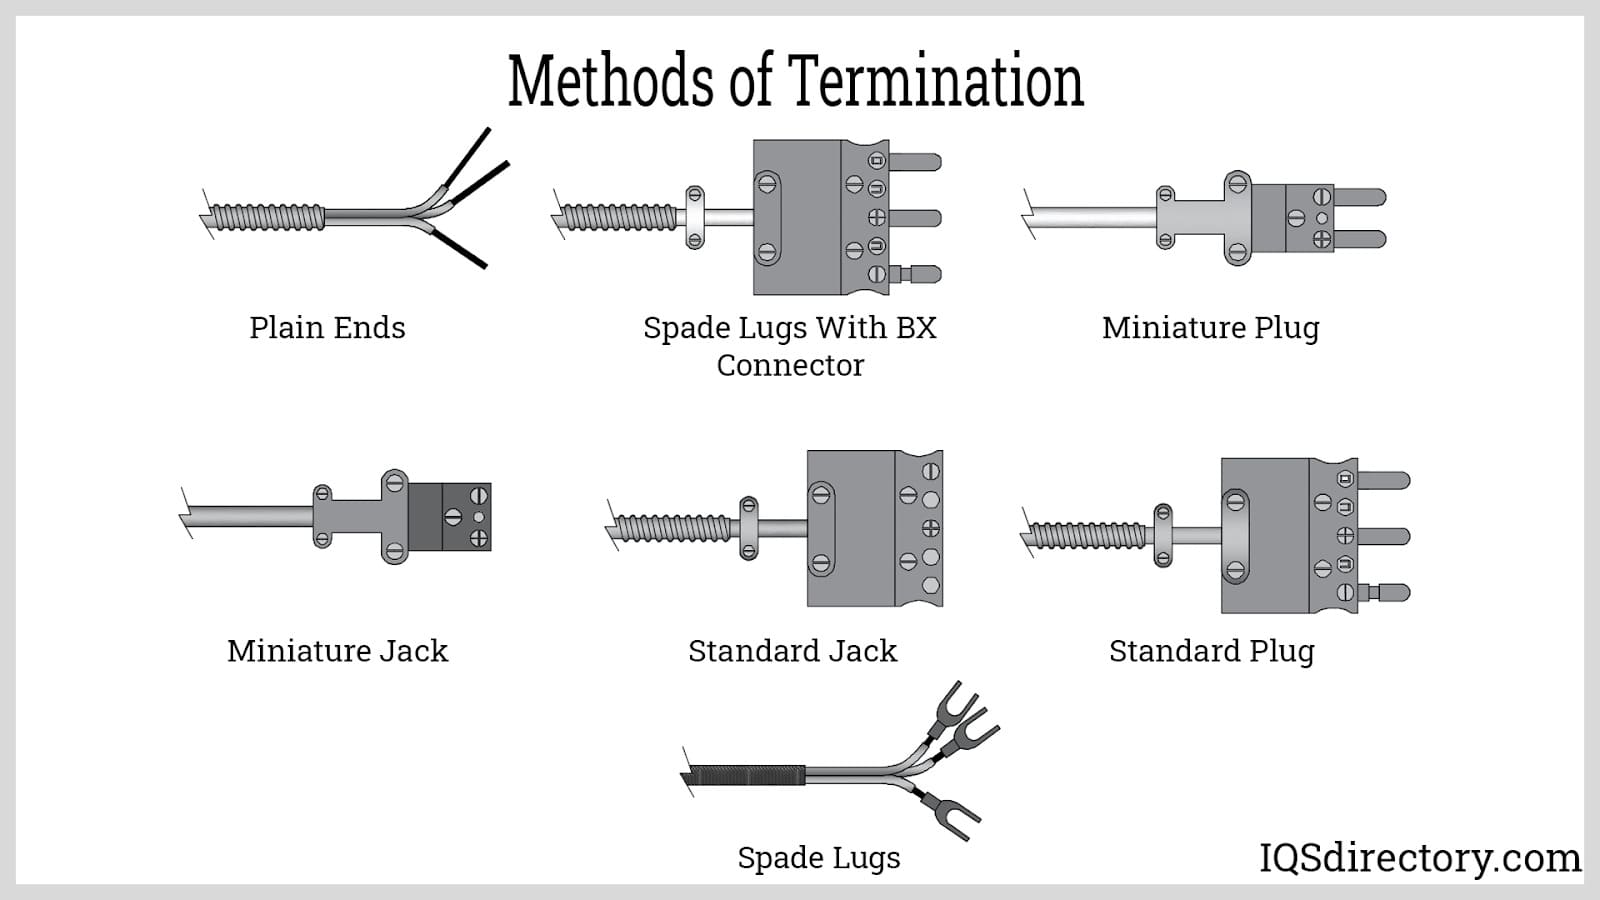 Methods of Termination